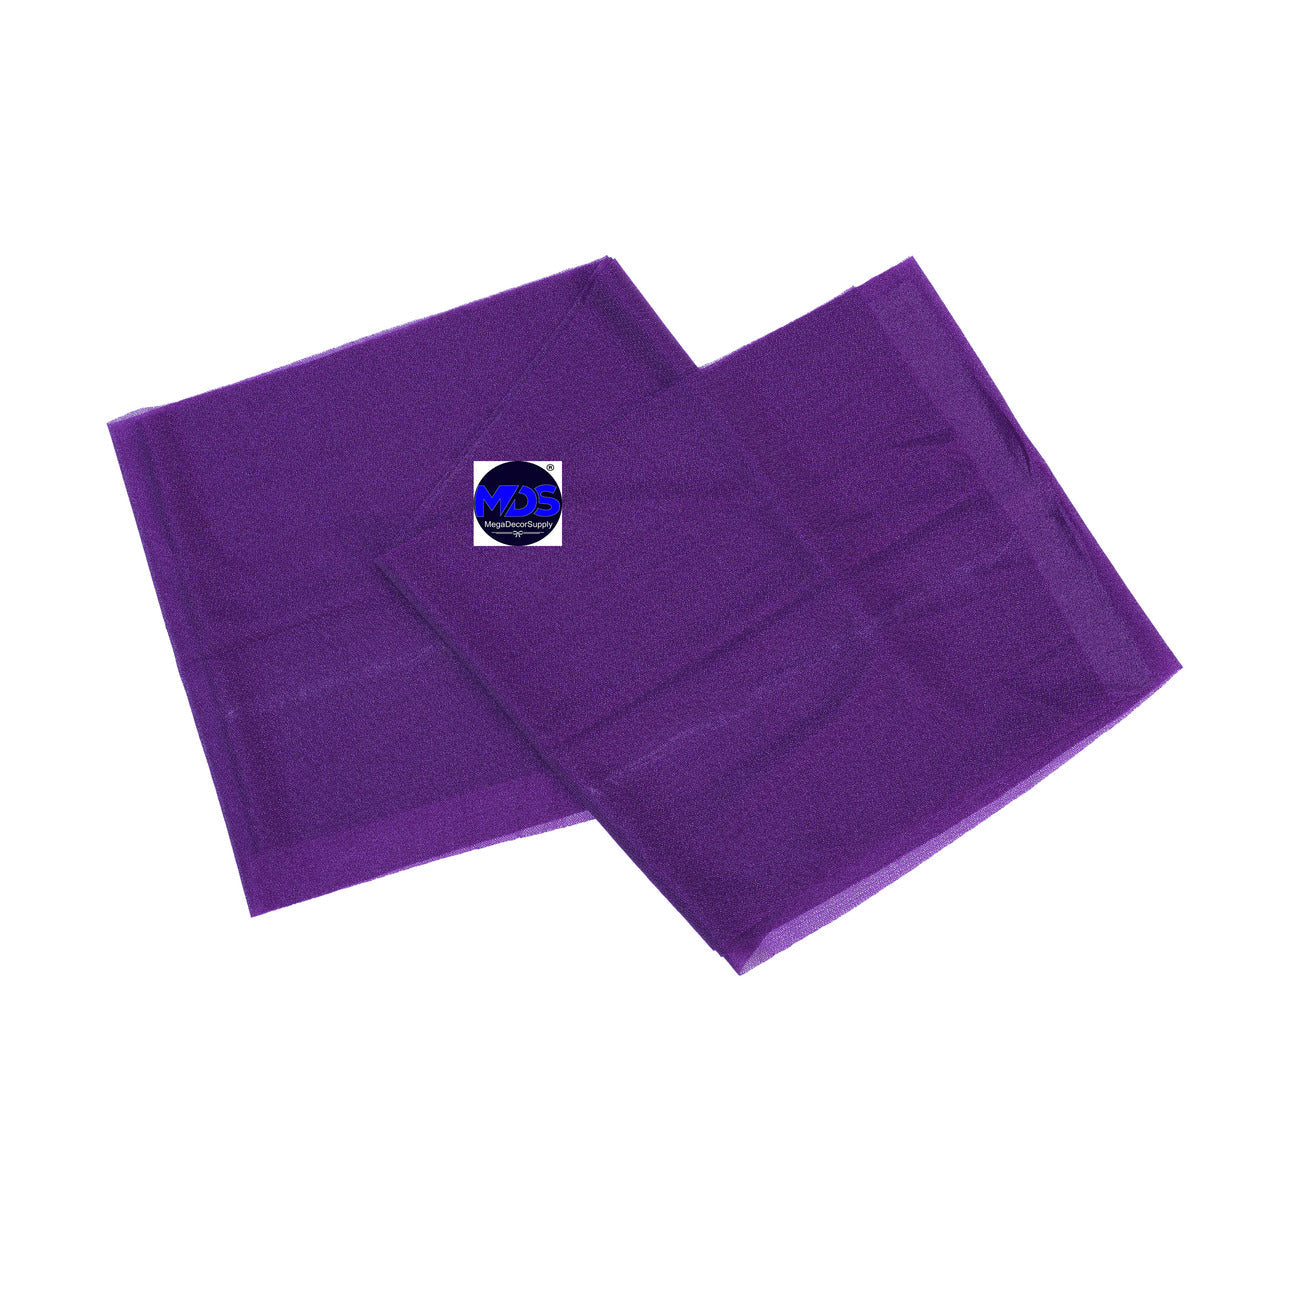 Purple,9d6d7129-bf59-4500-a0af-86b1d66b5d0a